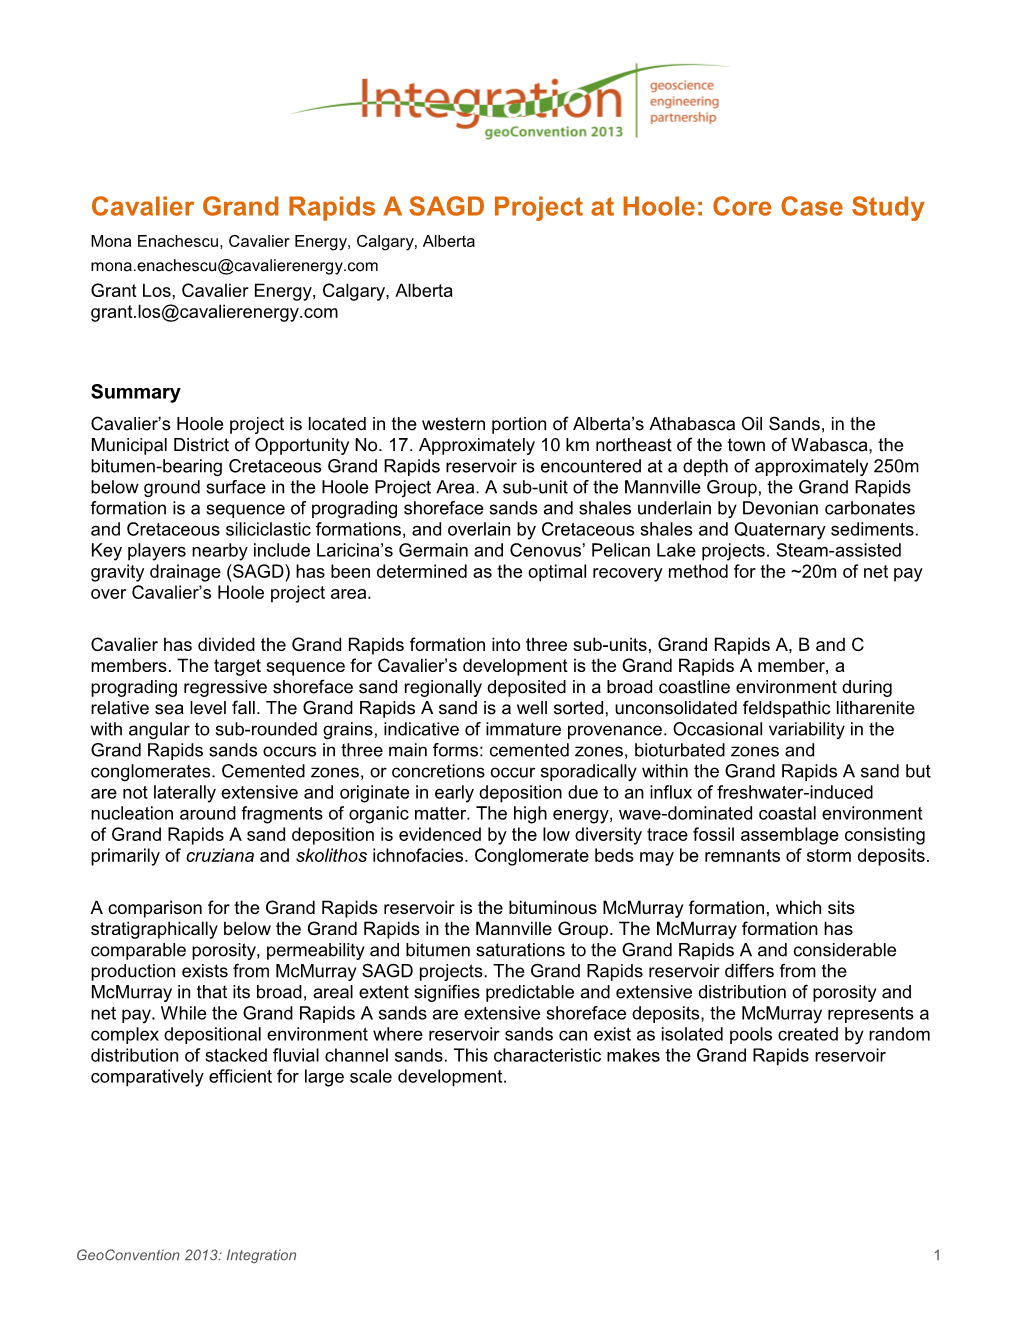 Cavalier Grand Rapids a SAGD Project at Hoole